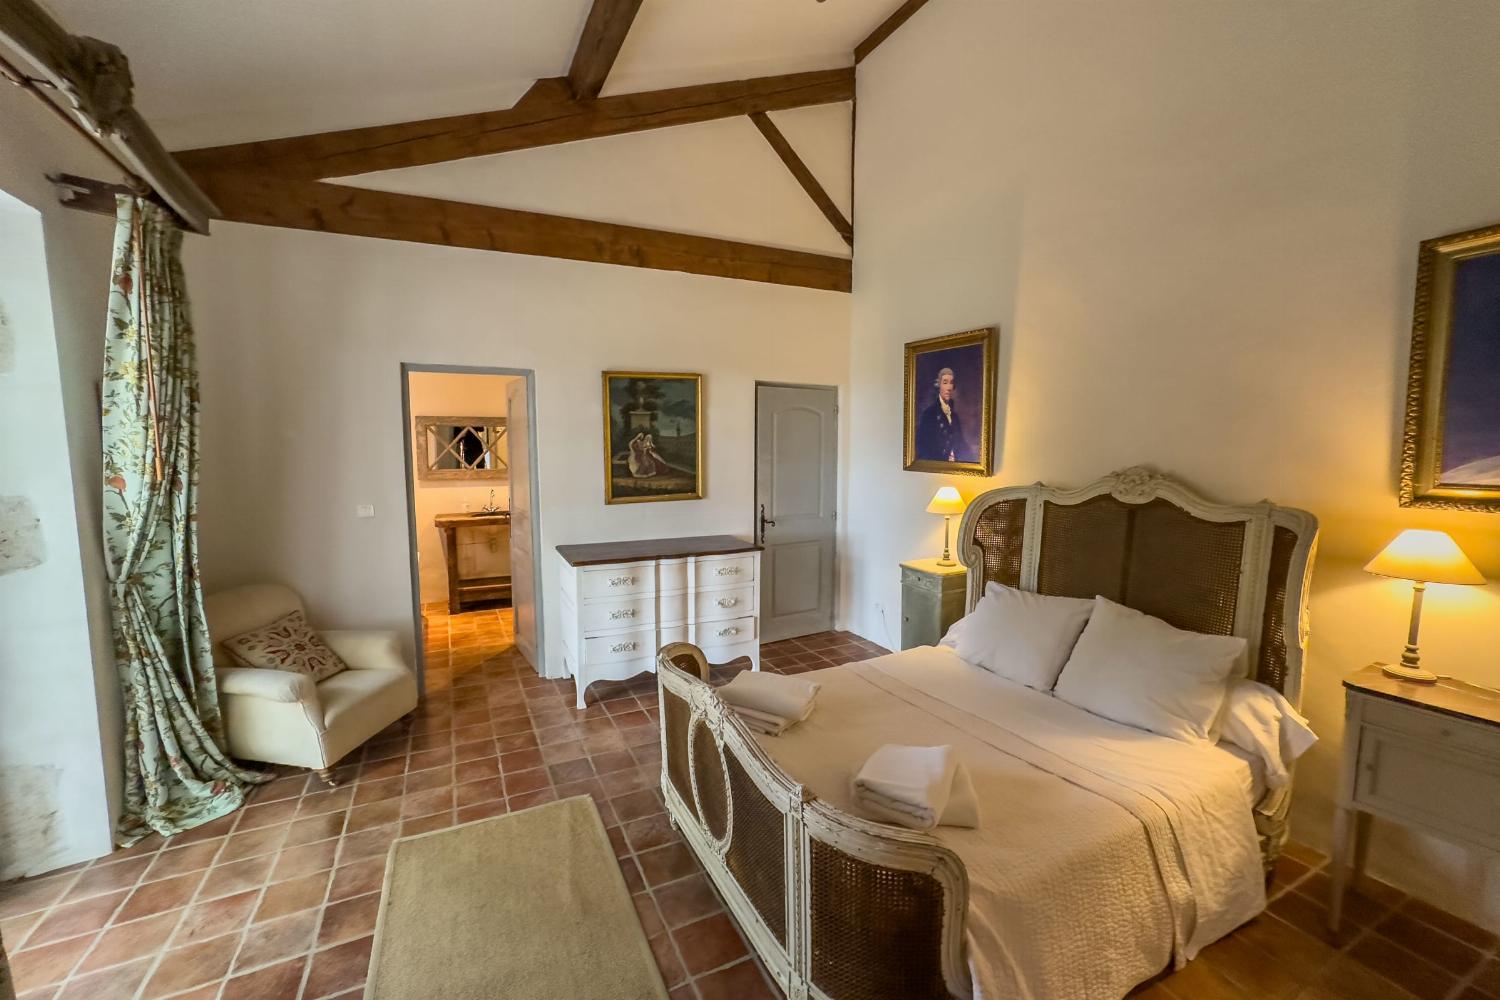 Cinema house bedroom | Holiday accommodation in Tarn-en-Garonne